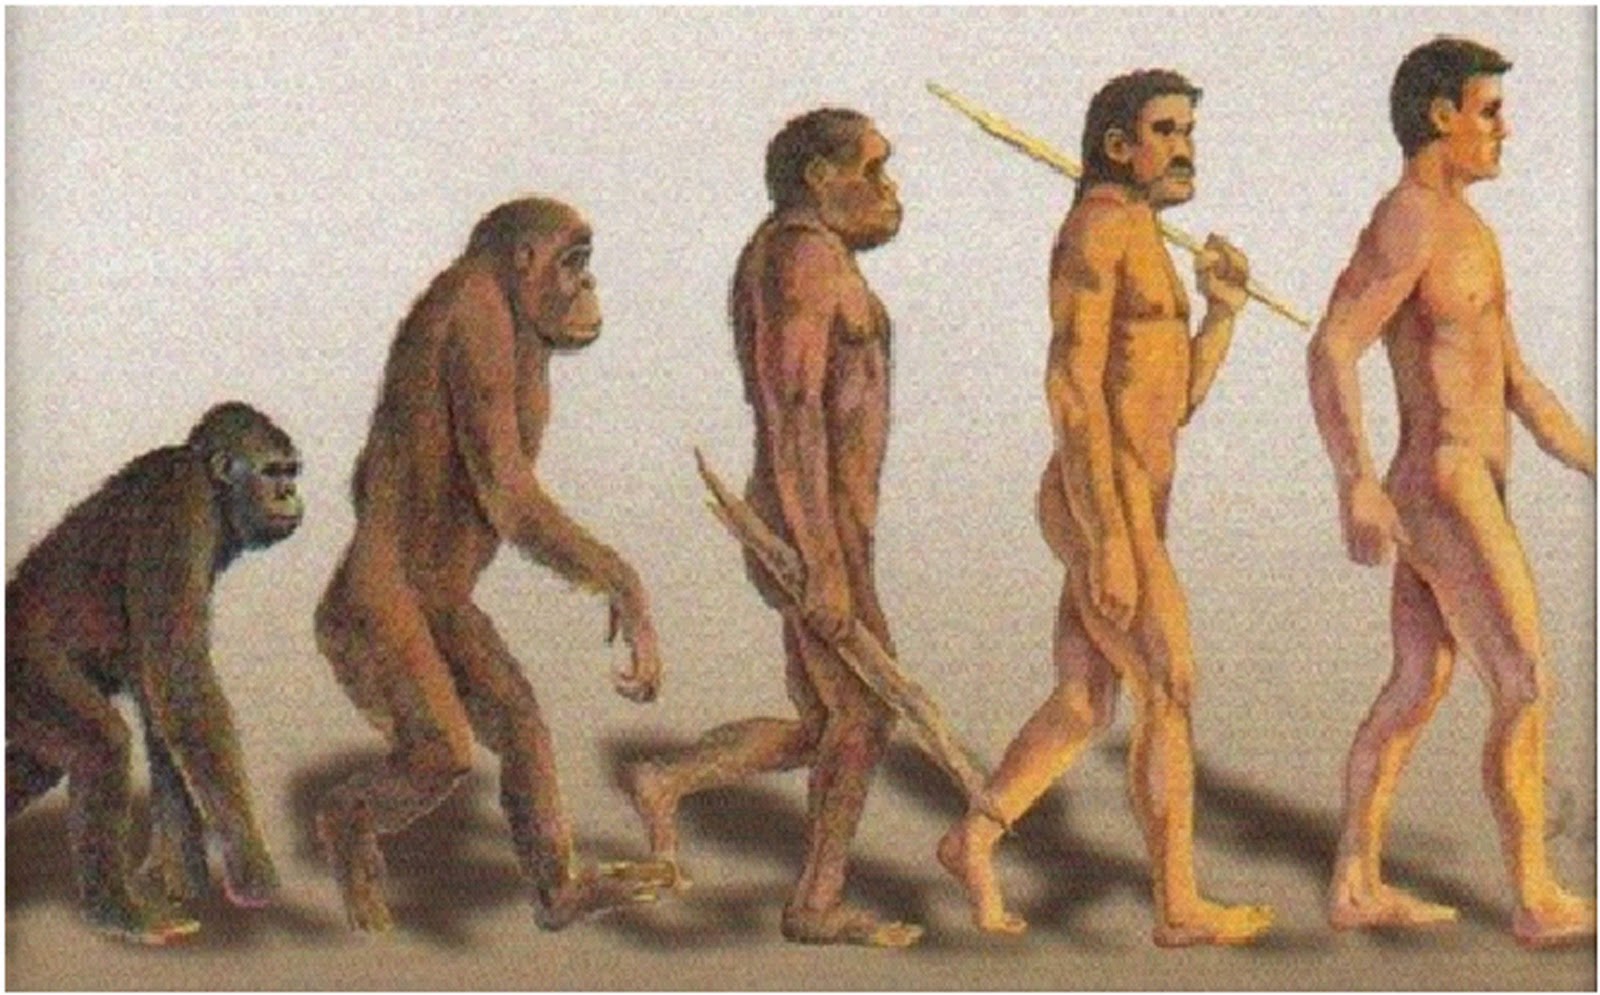 evolusi manusia